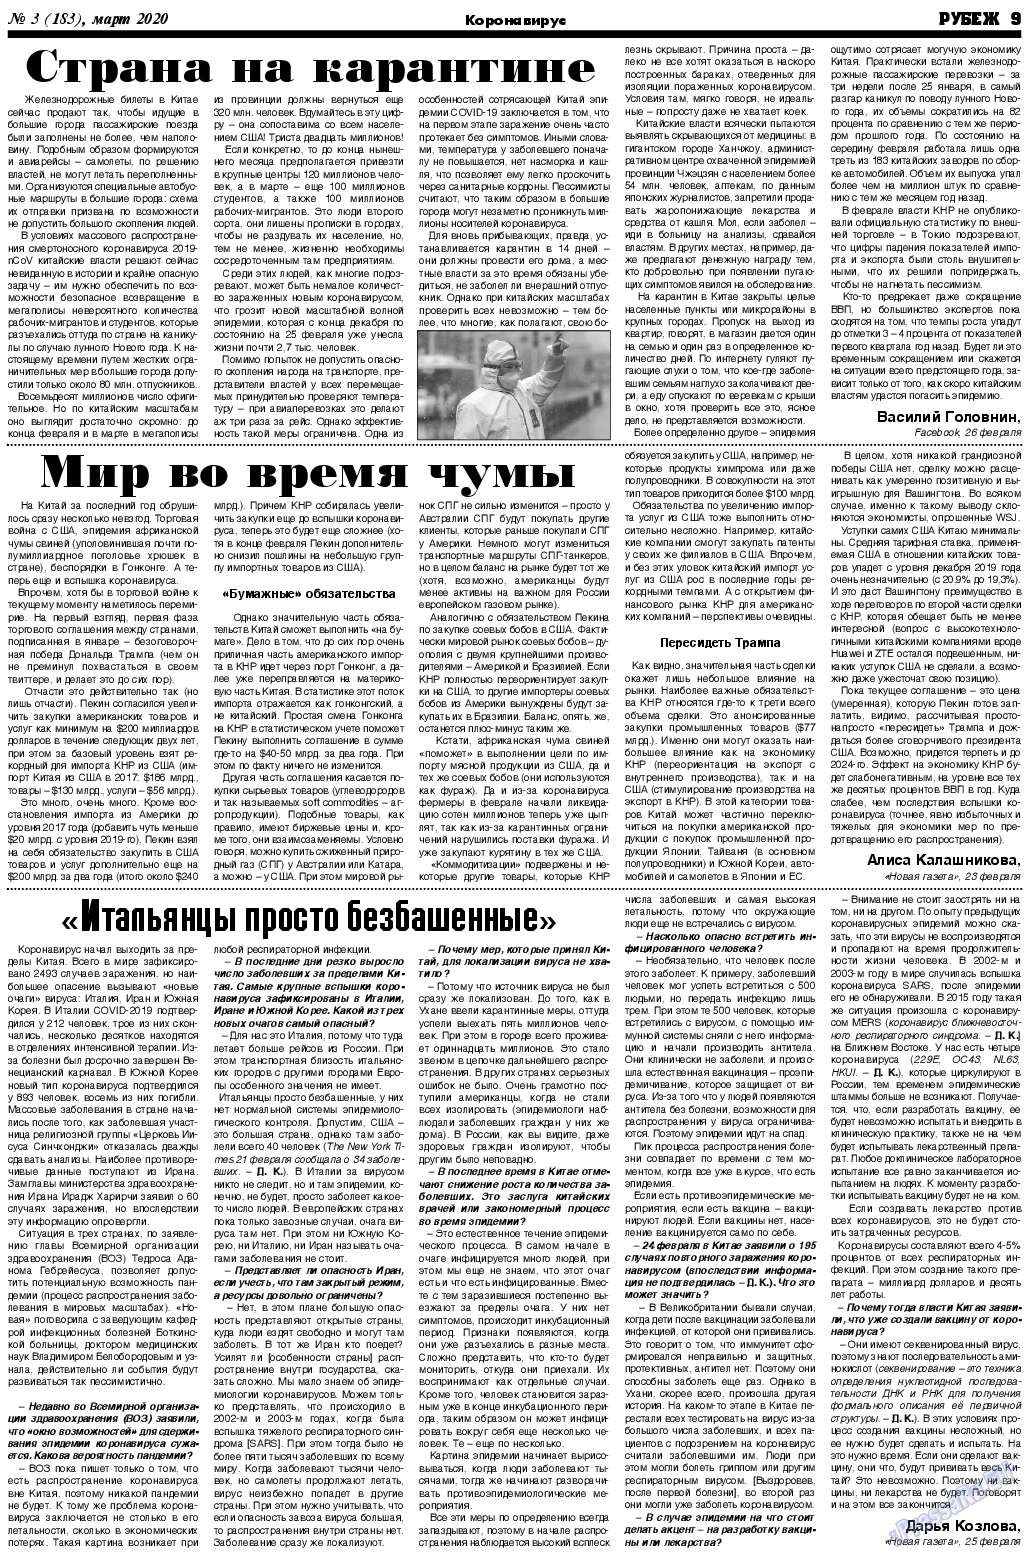 Рубеж, газета. 2020 №3 стр.9